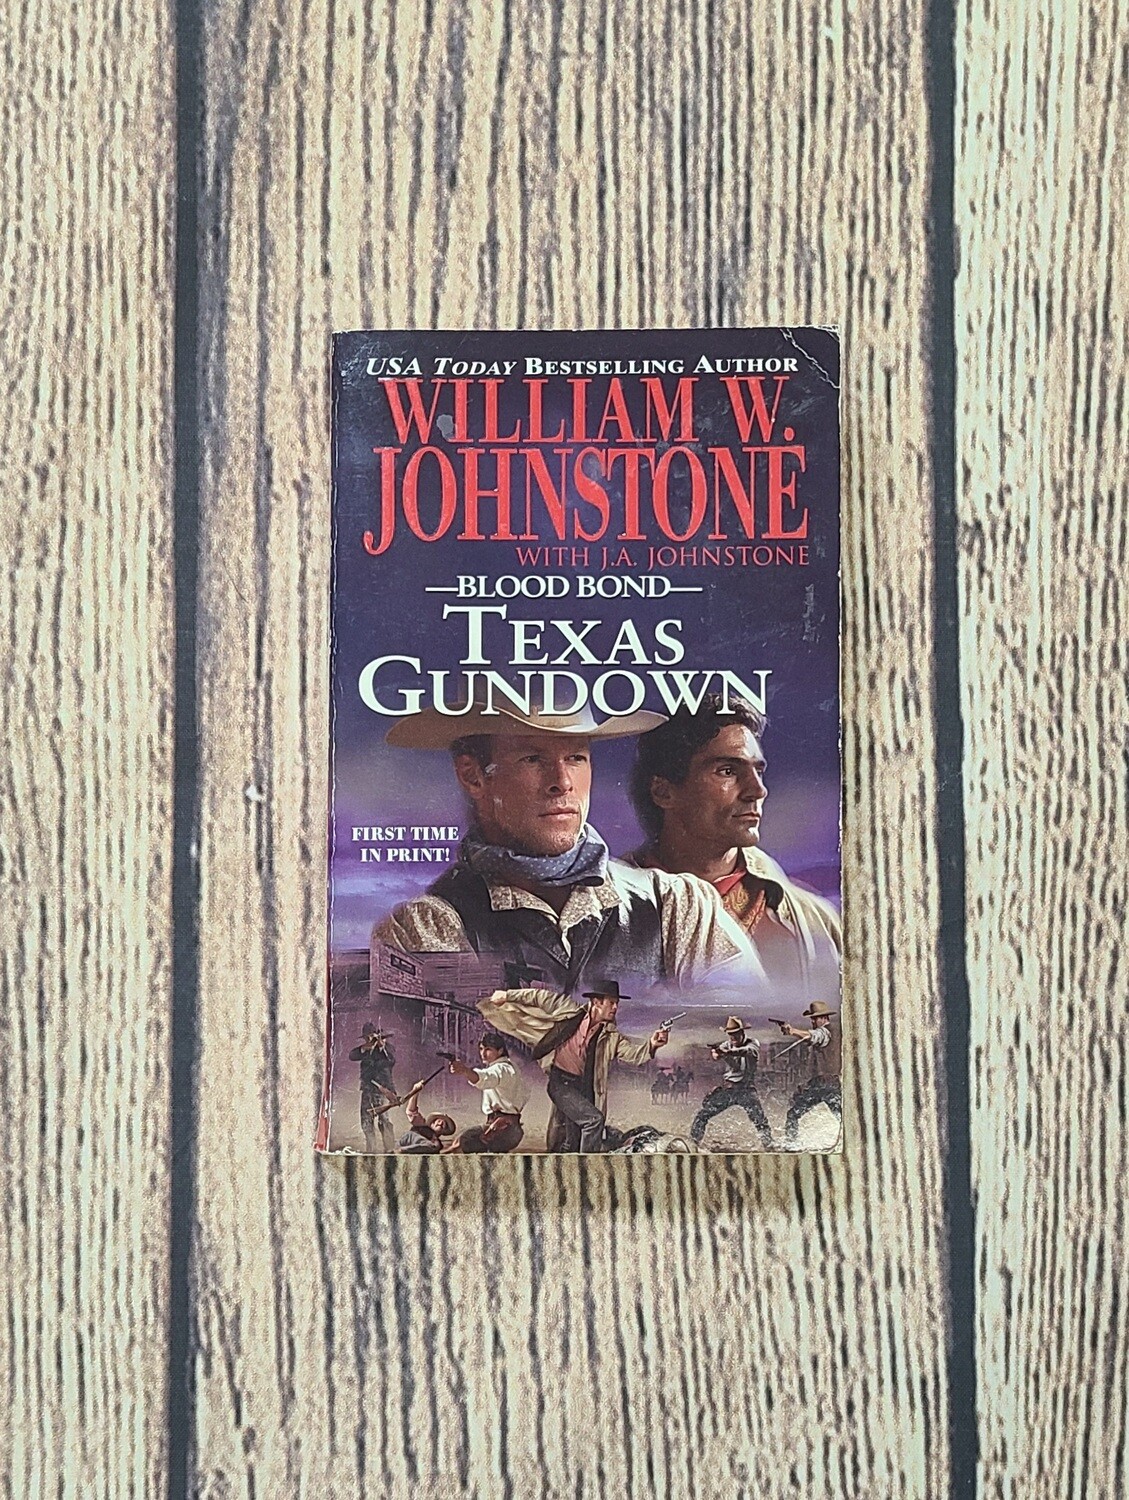 Blood Bond: Texas Gundown by William W. Johnstone with J.A. Johnstone